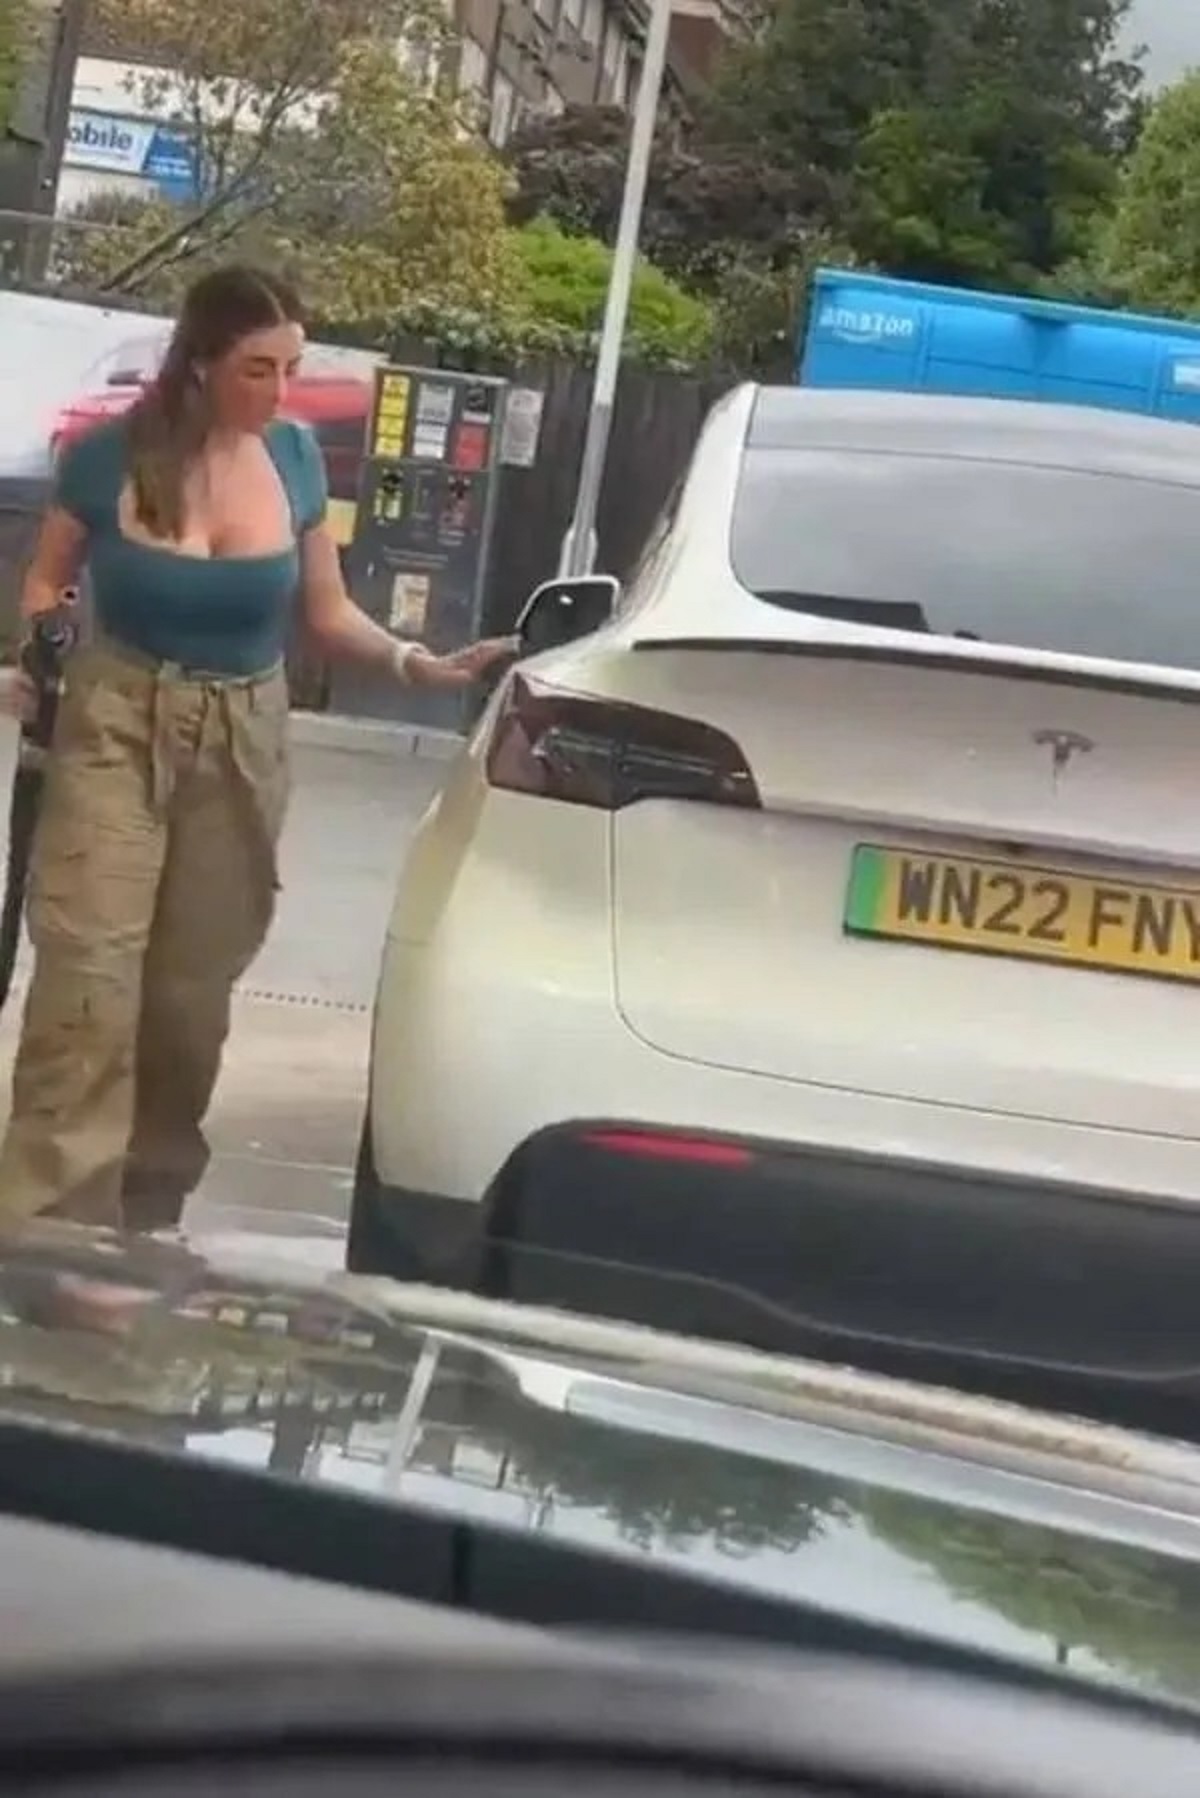 girl tries to put gas in tesla - obile amazon WN22 Fny